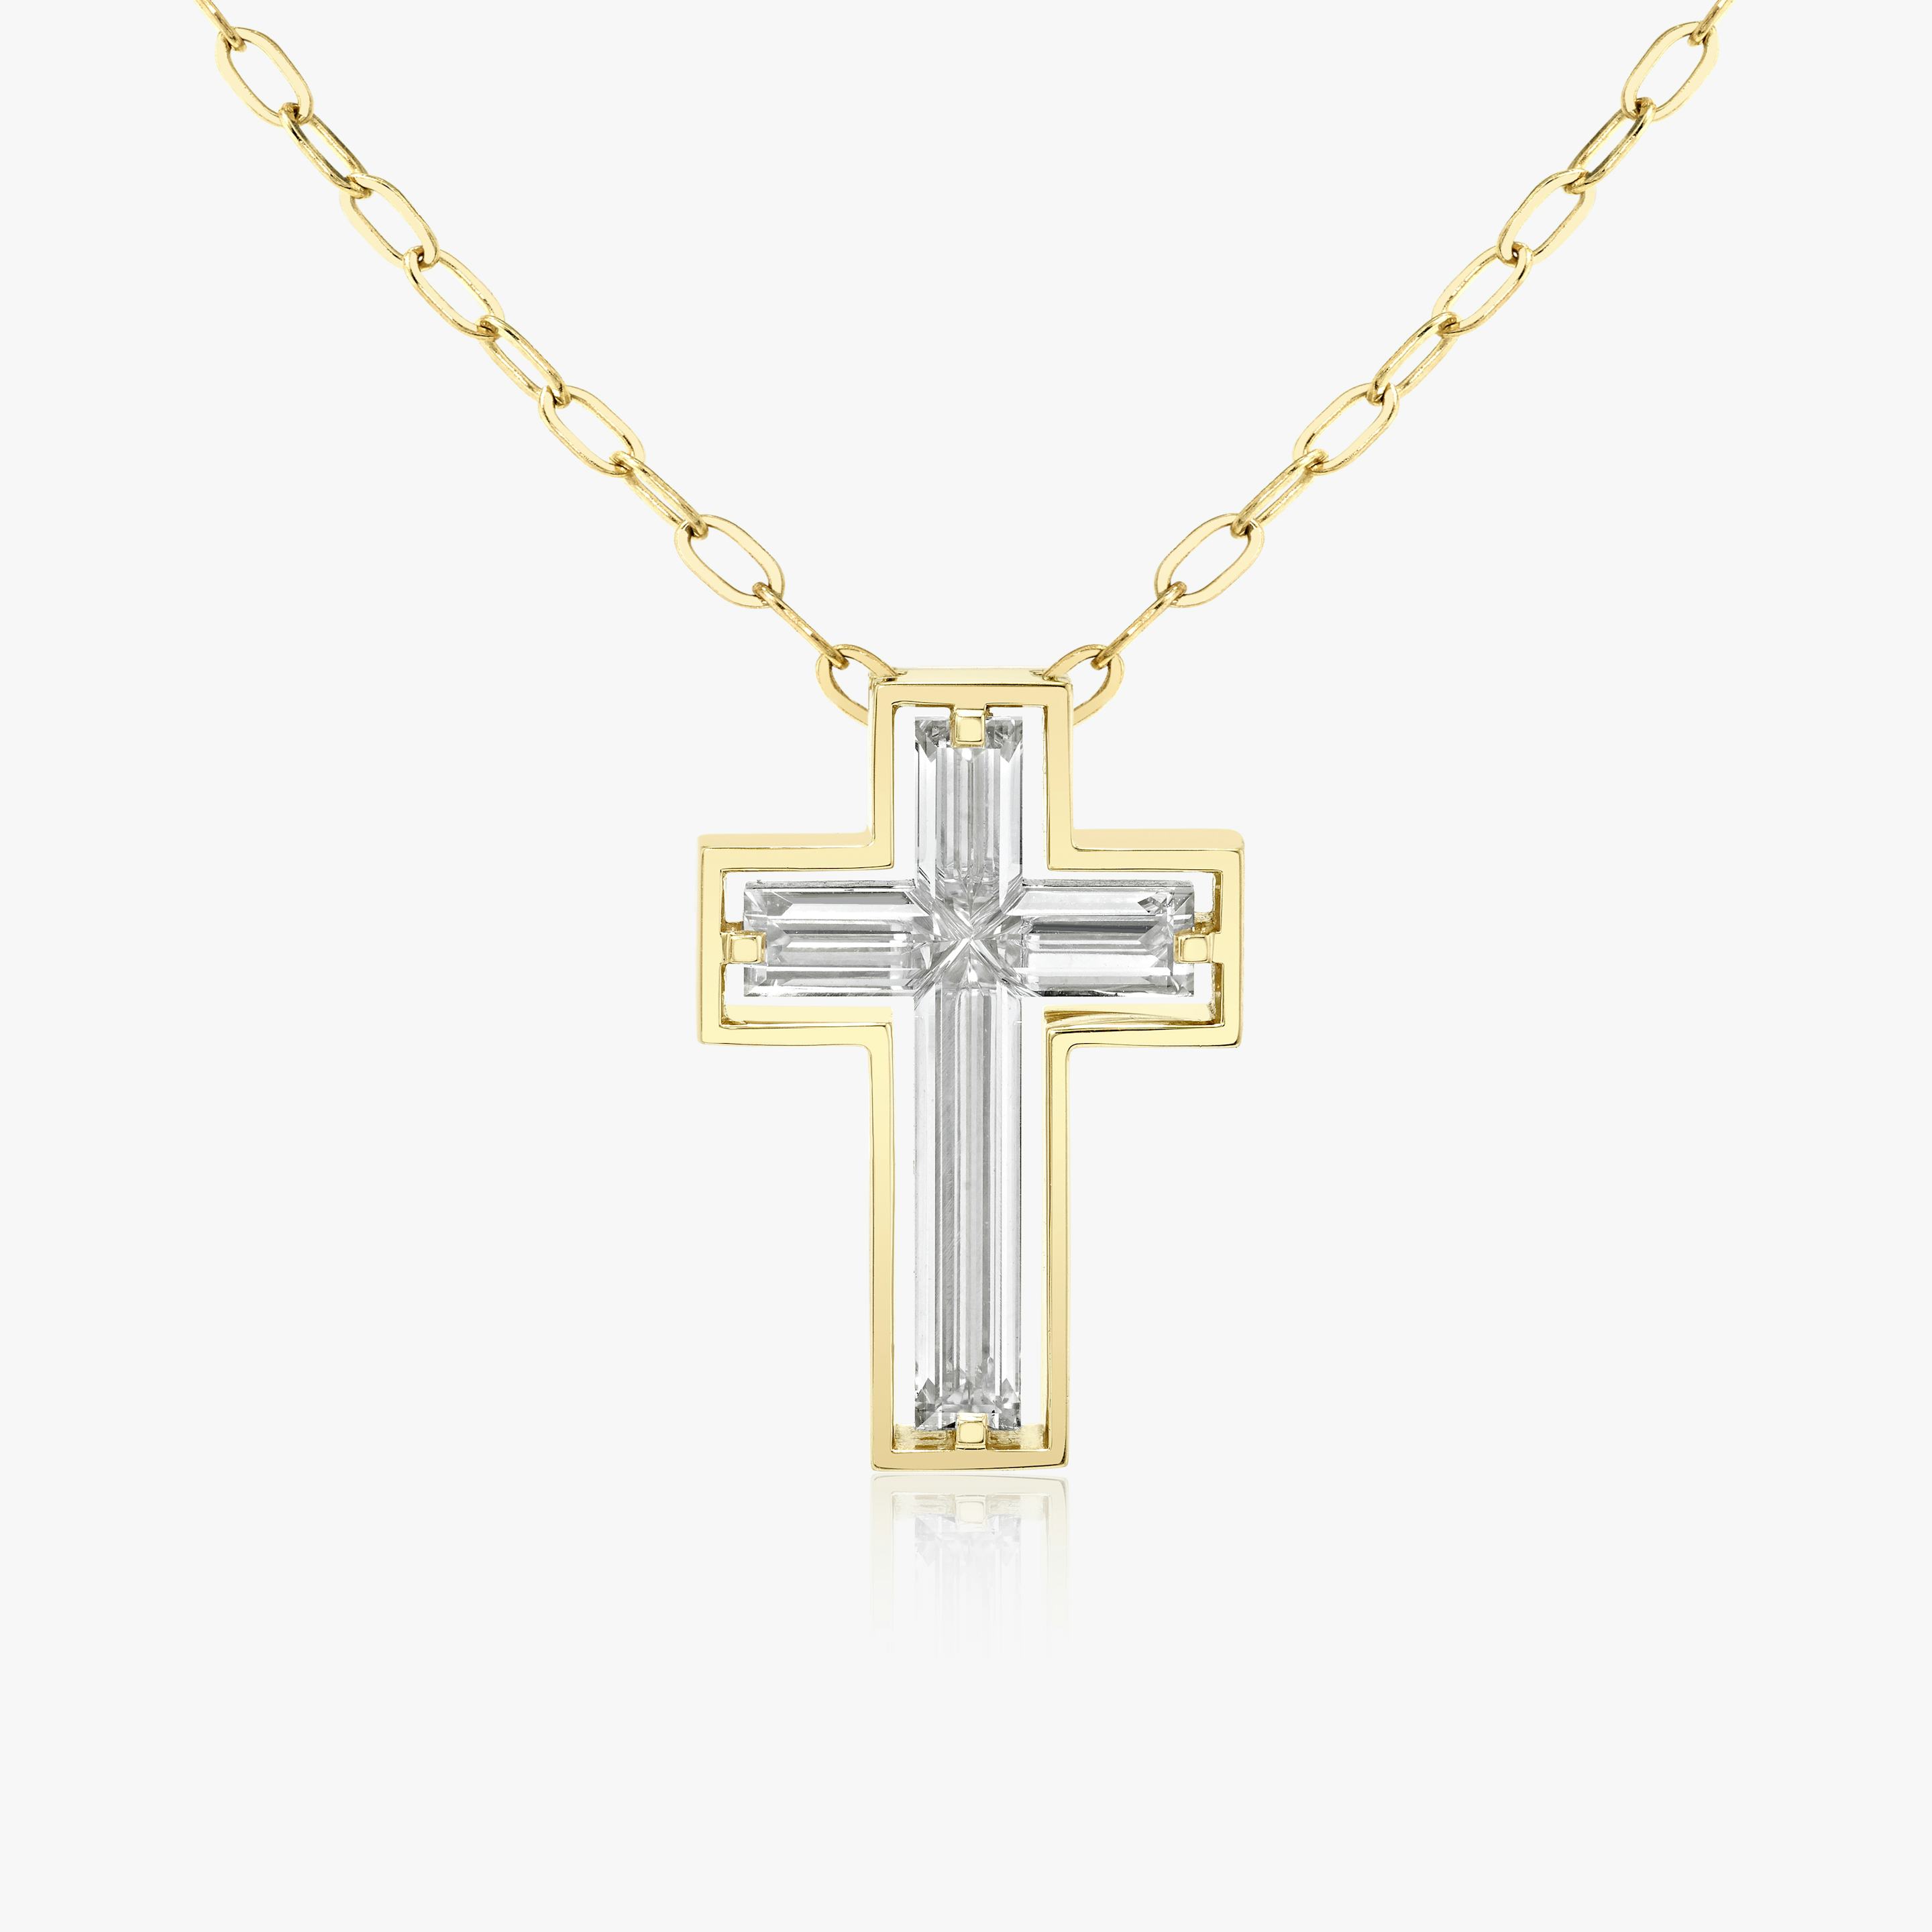 Suspended Solitaire Cross Halskette | 18k | 18k Gelbgold | Kettenlänge: 18-20